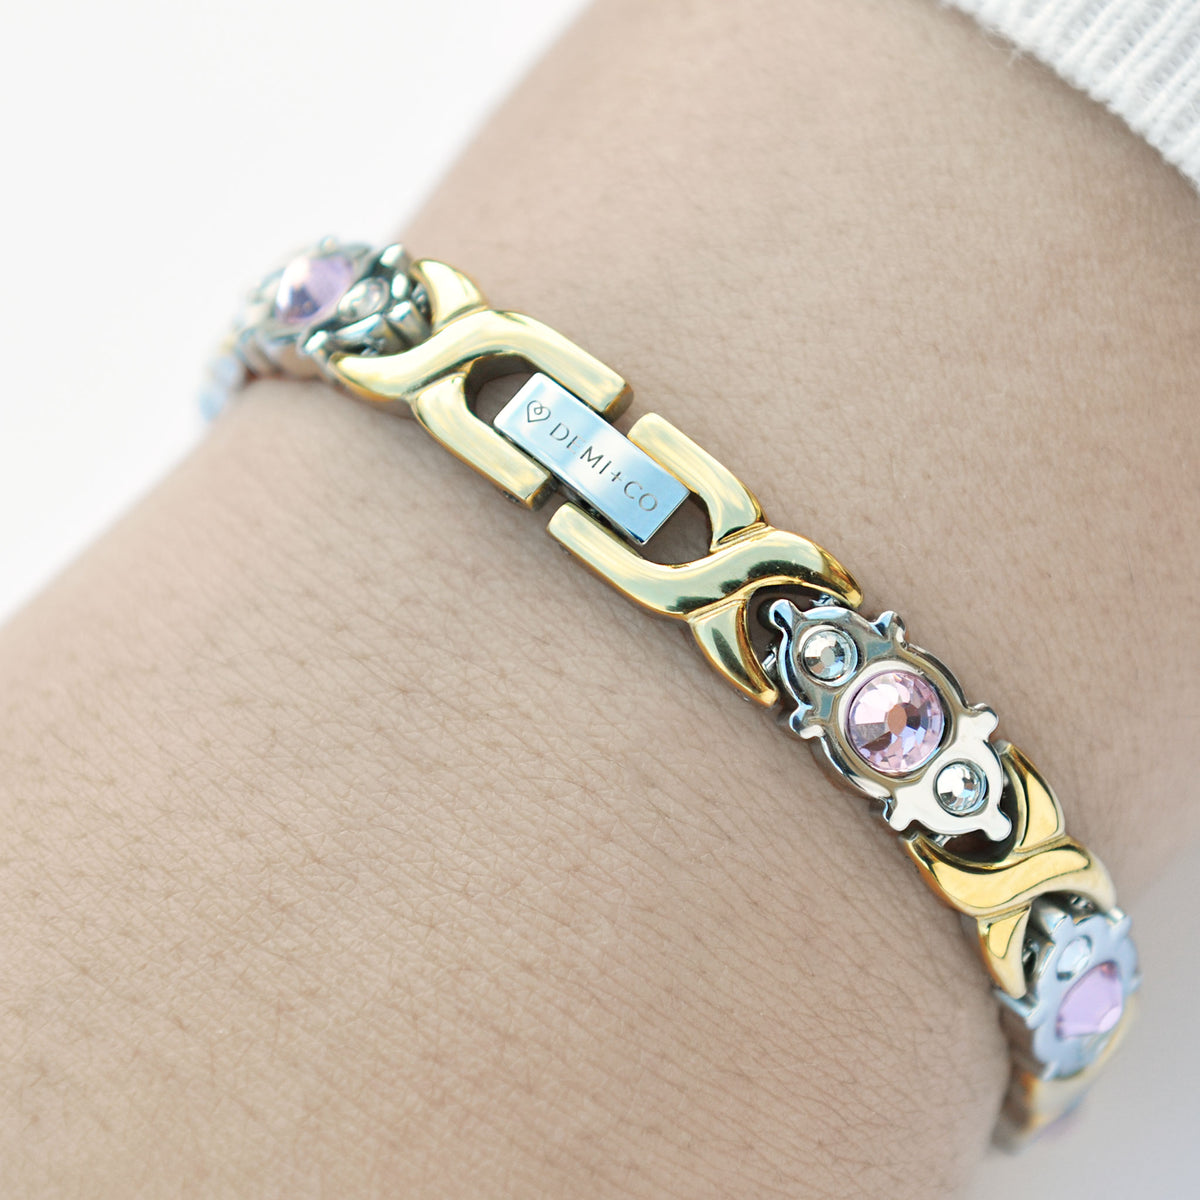 Top more than 80 metal bracelets for women latest - POPPY